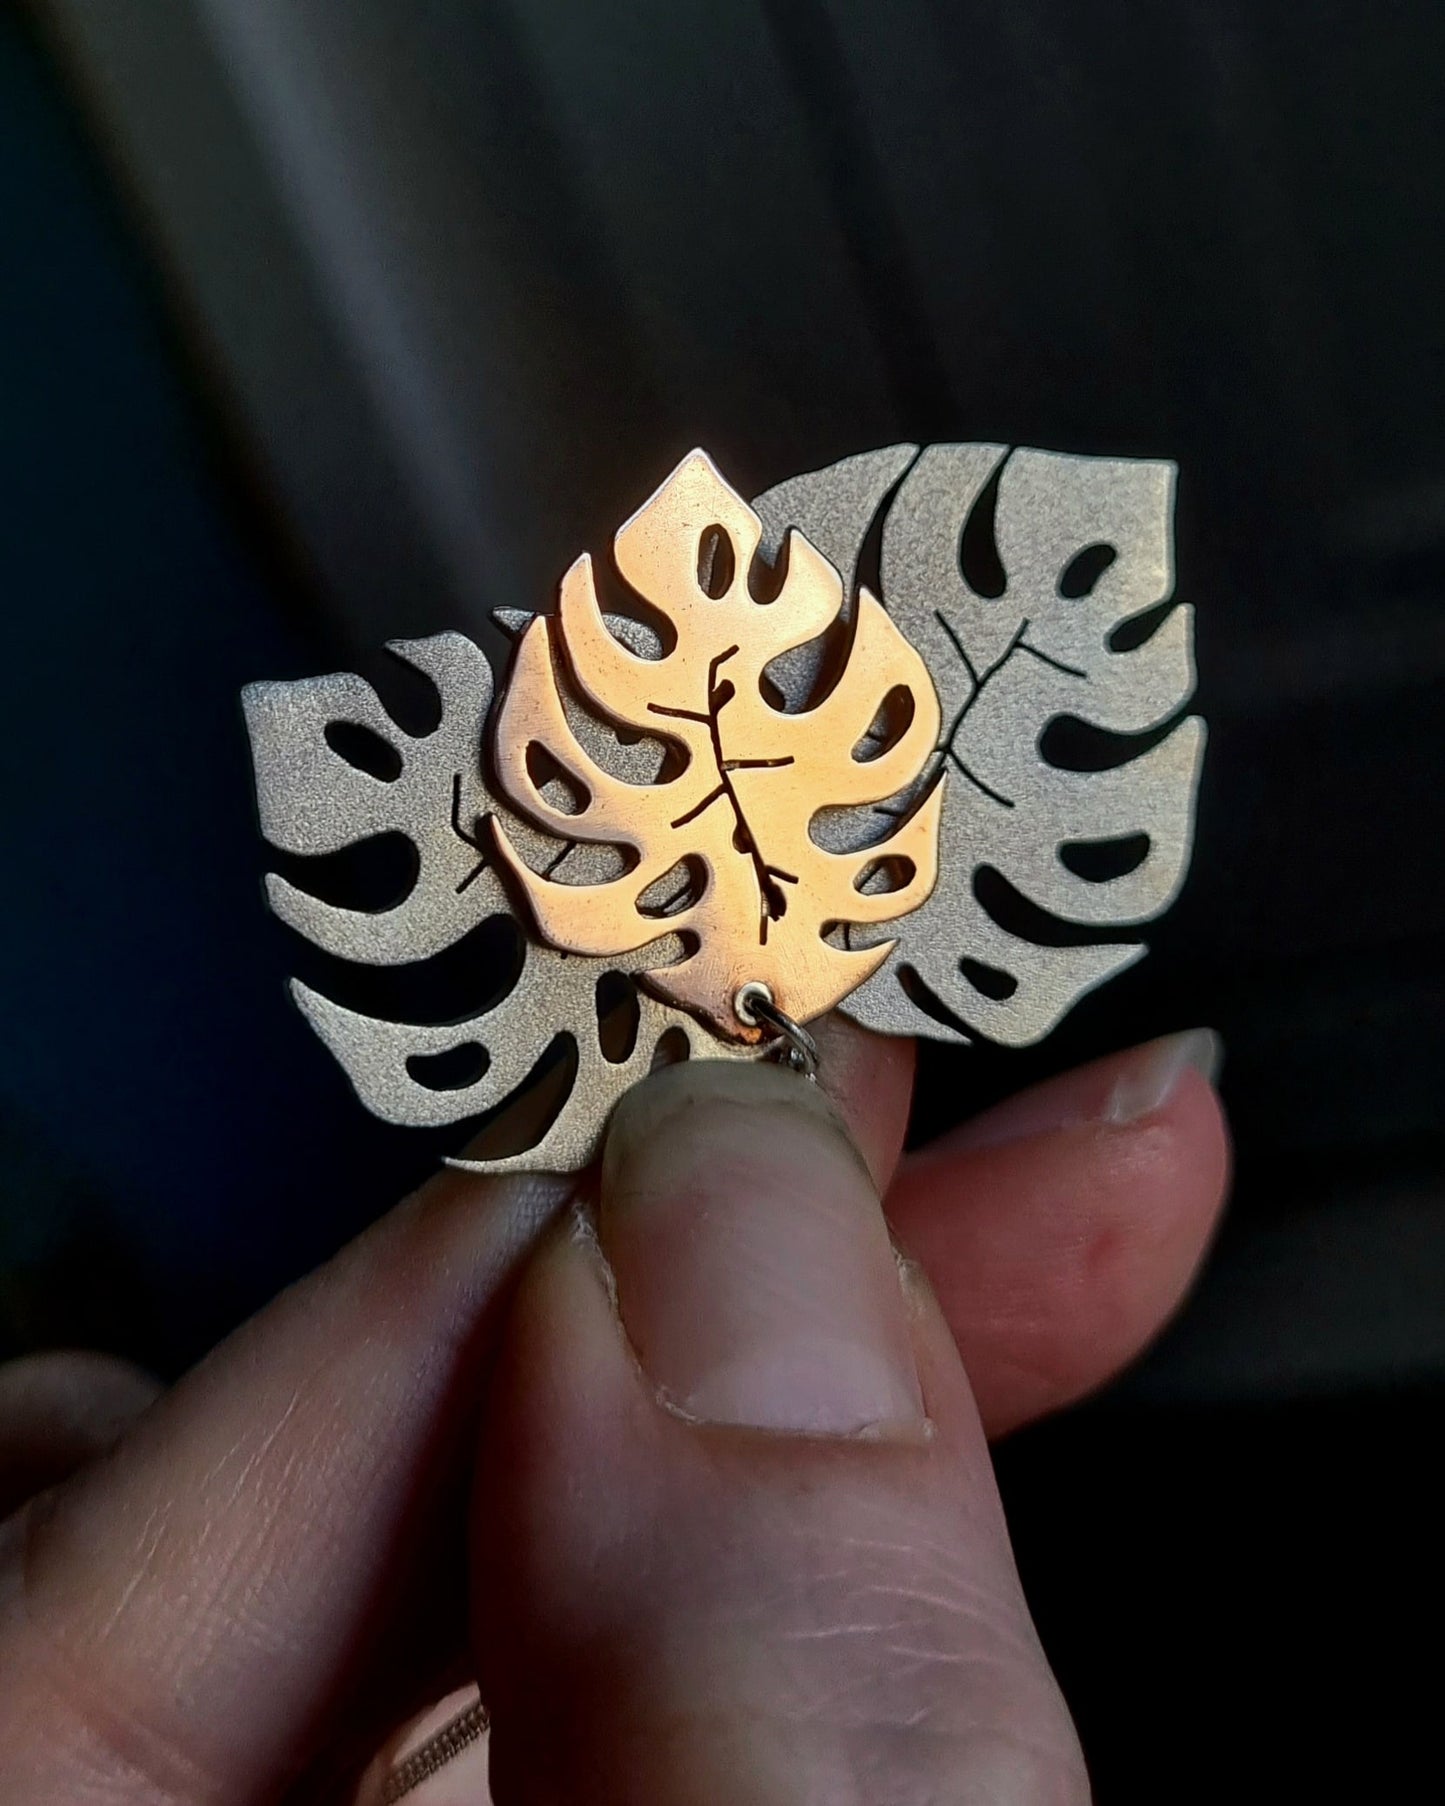 Sterling Silver Monstera leaf pendant